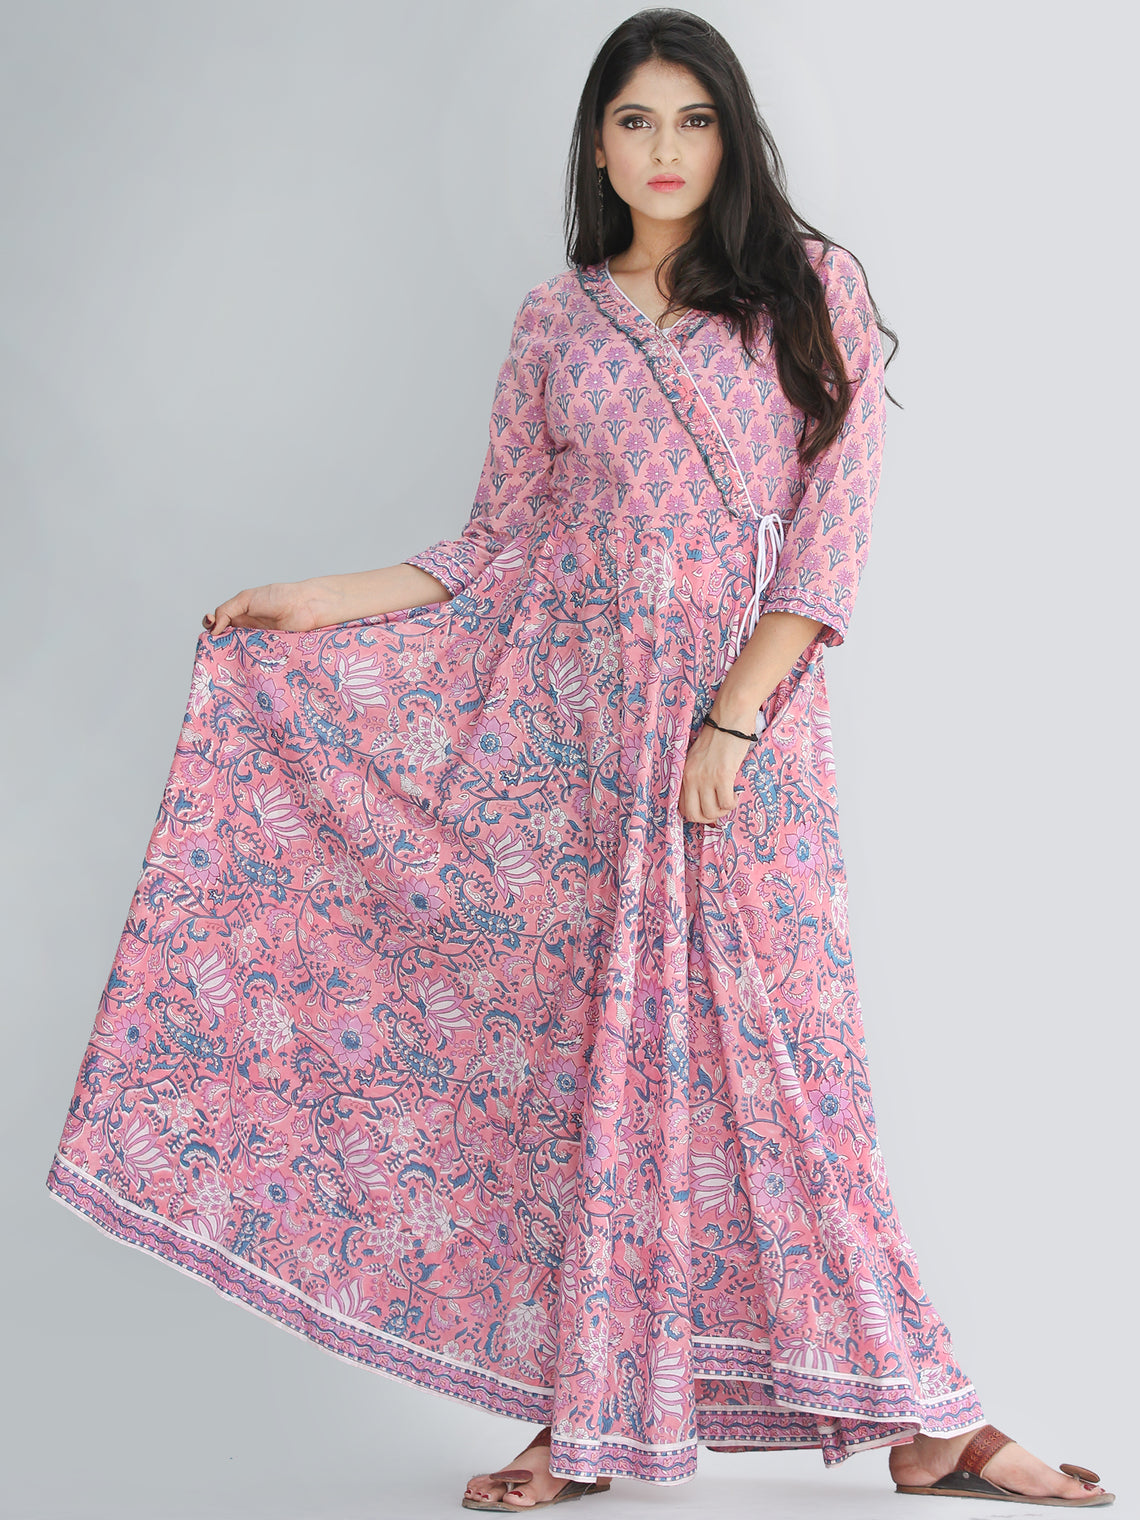 Gulzar Turfa - Hand Block Printed Angrakha Long Dress - D411F2232 ...